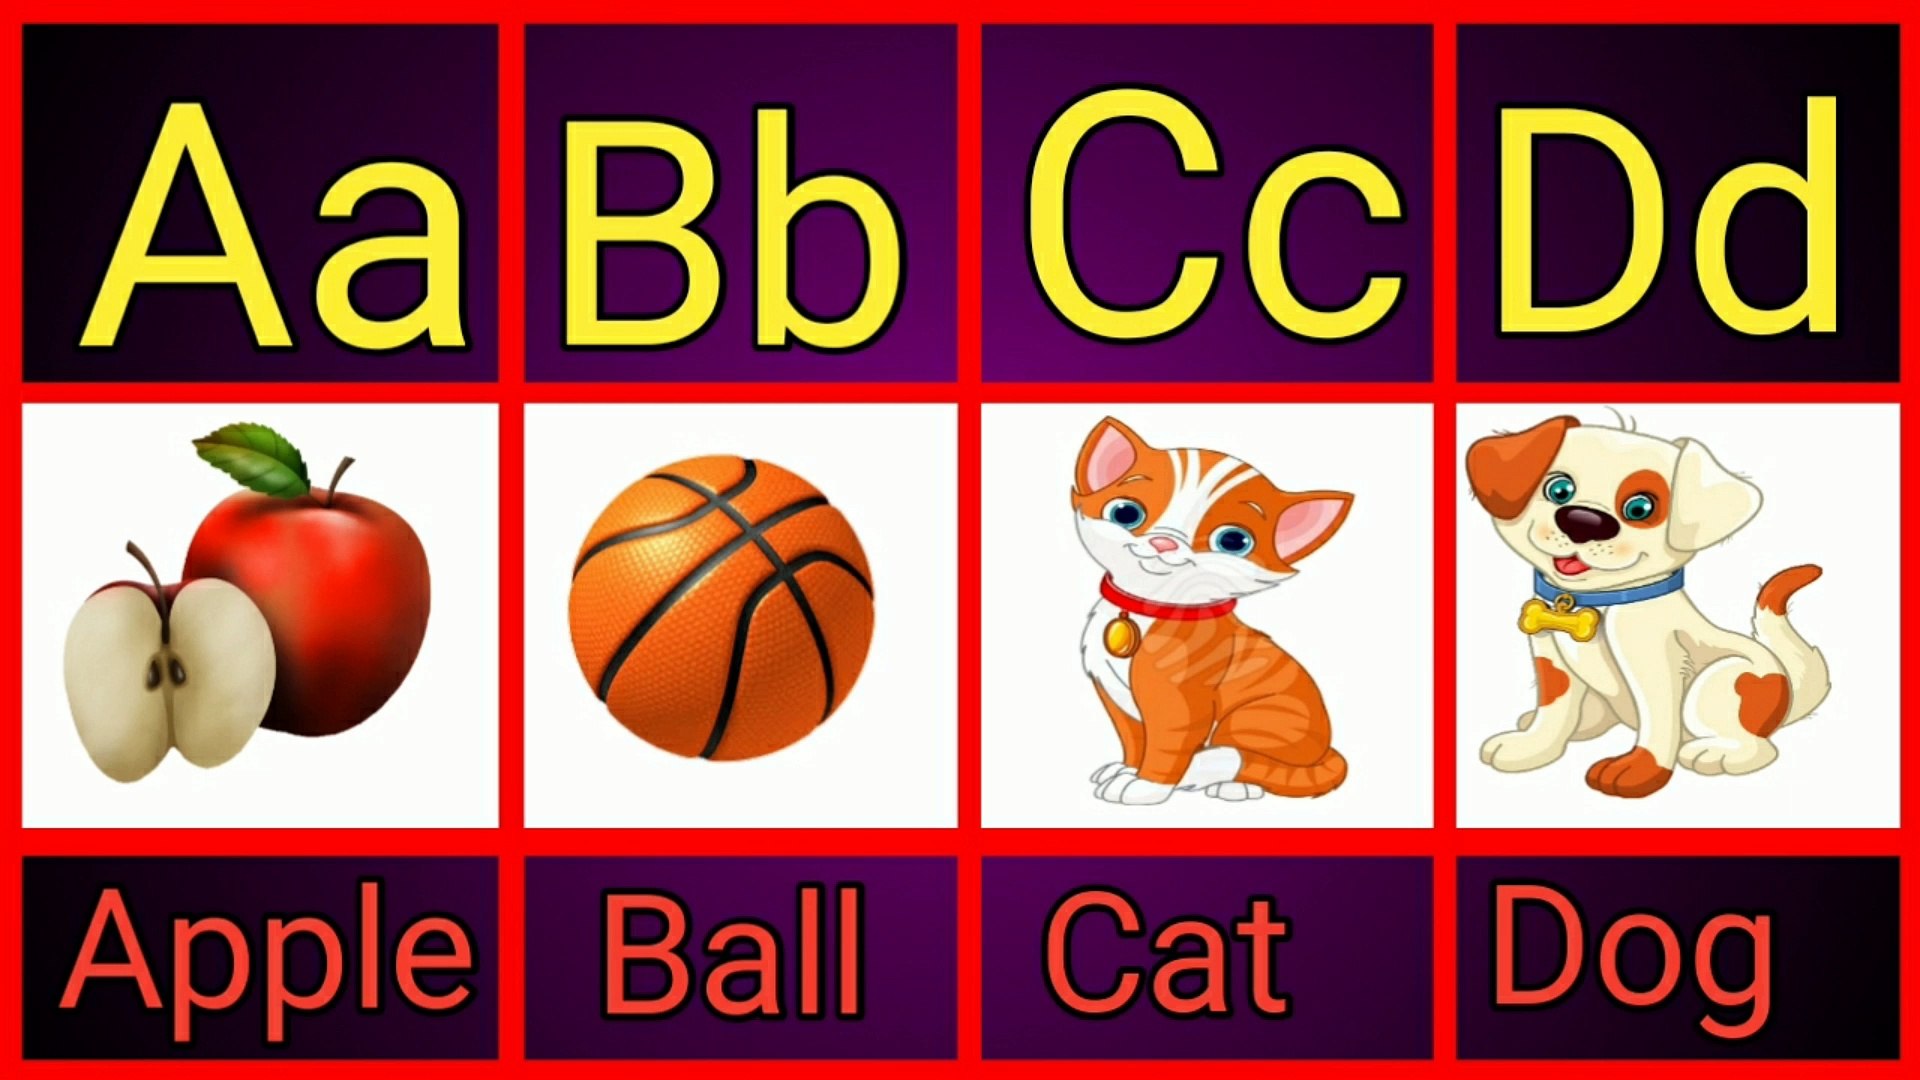 A for Apple b for Ball, English Varnamala, HINDI ALPHABETS, ALPHABETS,  hindi varnamala, baby, A For Apple B for Ball C for Cat, ABC Phonics Song  With Image, Alphabets For Kids, Alphabets